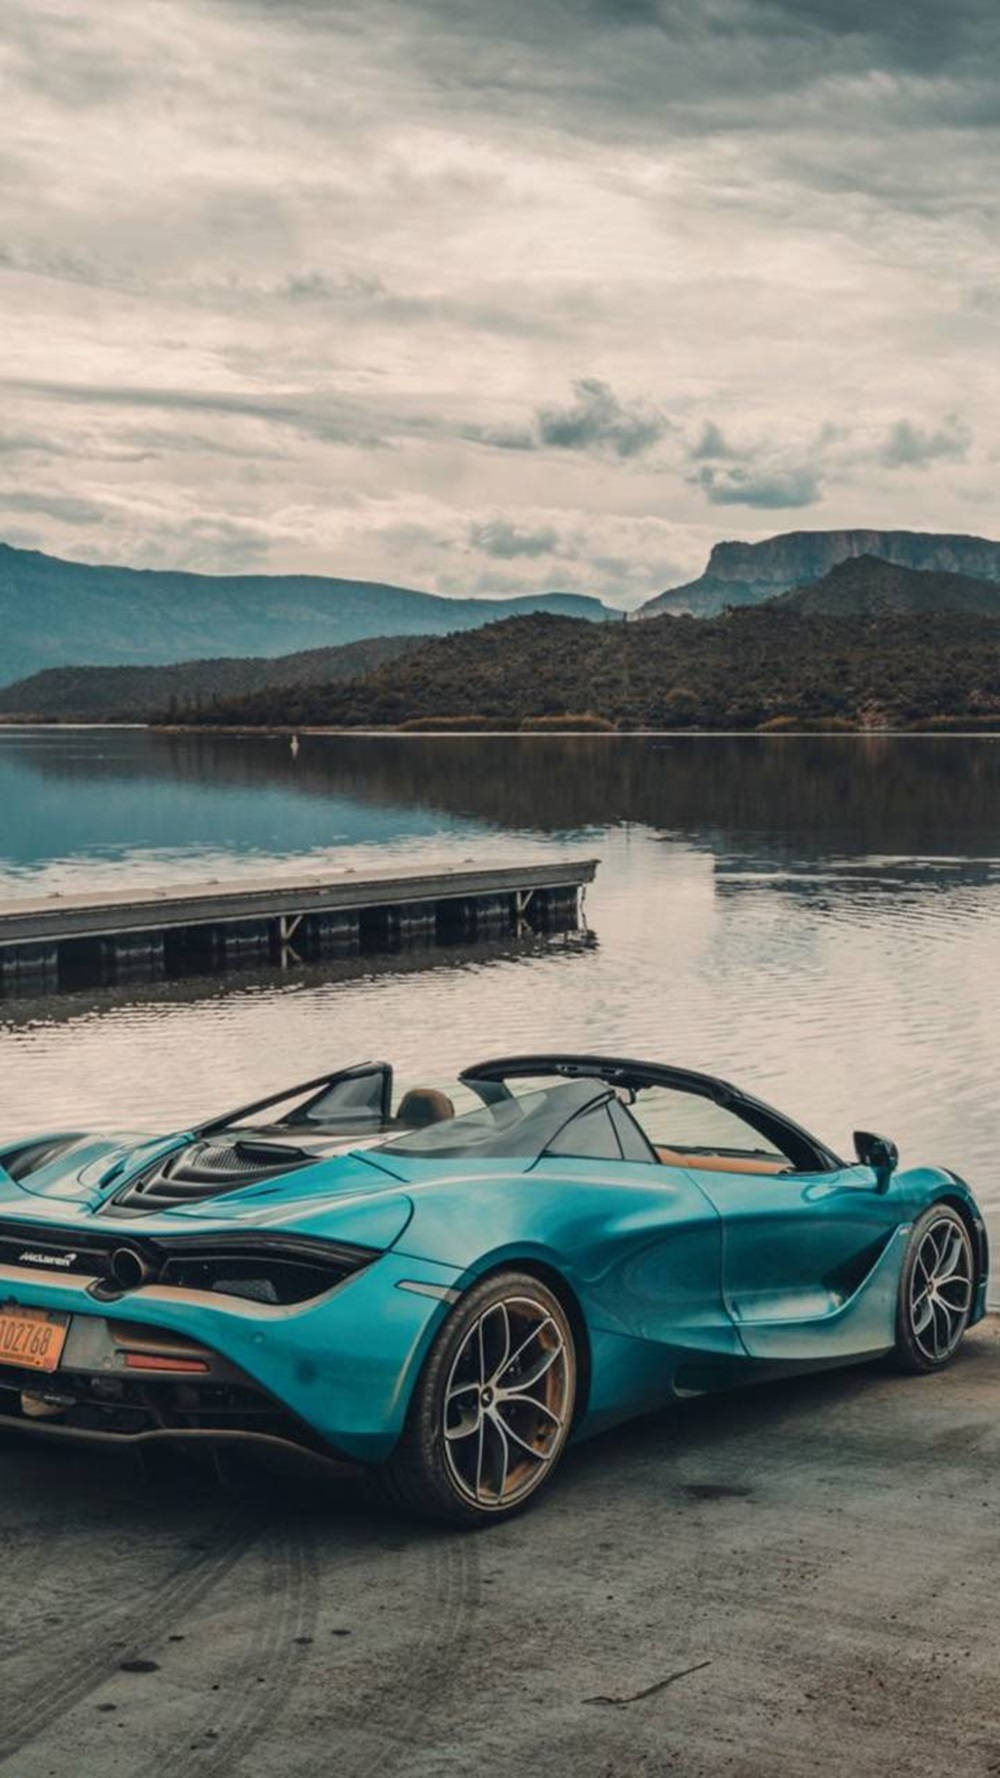 McLaren 720S Blue Car By Lake Phone Wallpaper